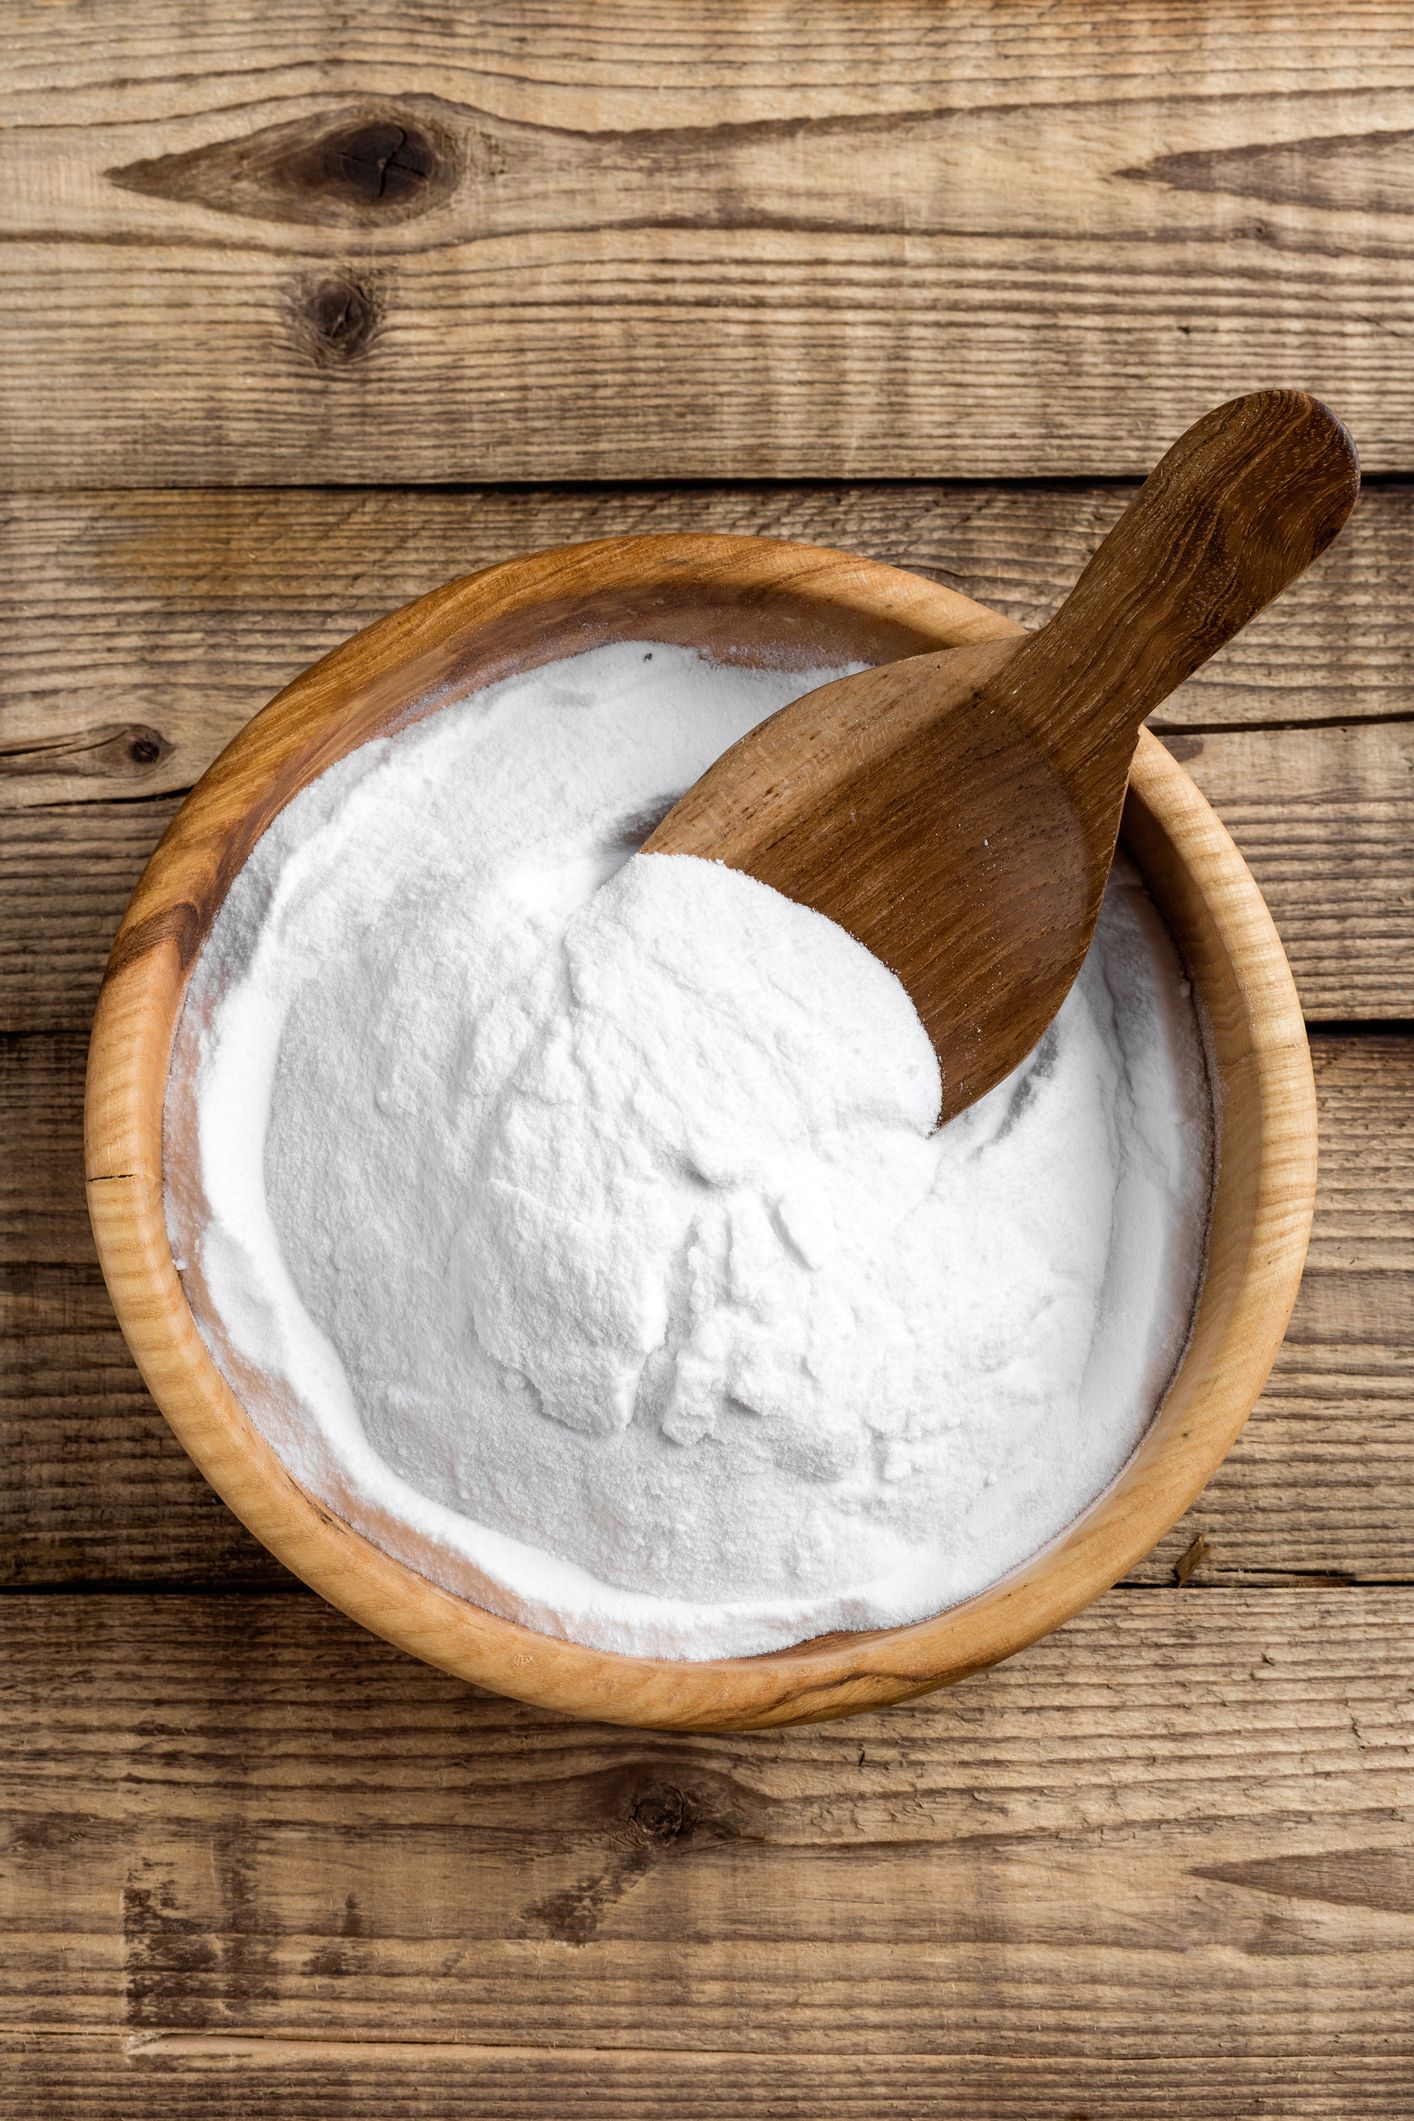 How to Fix Baking Soda or Baking Powder Recipe Mishaps